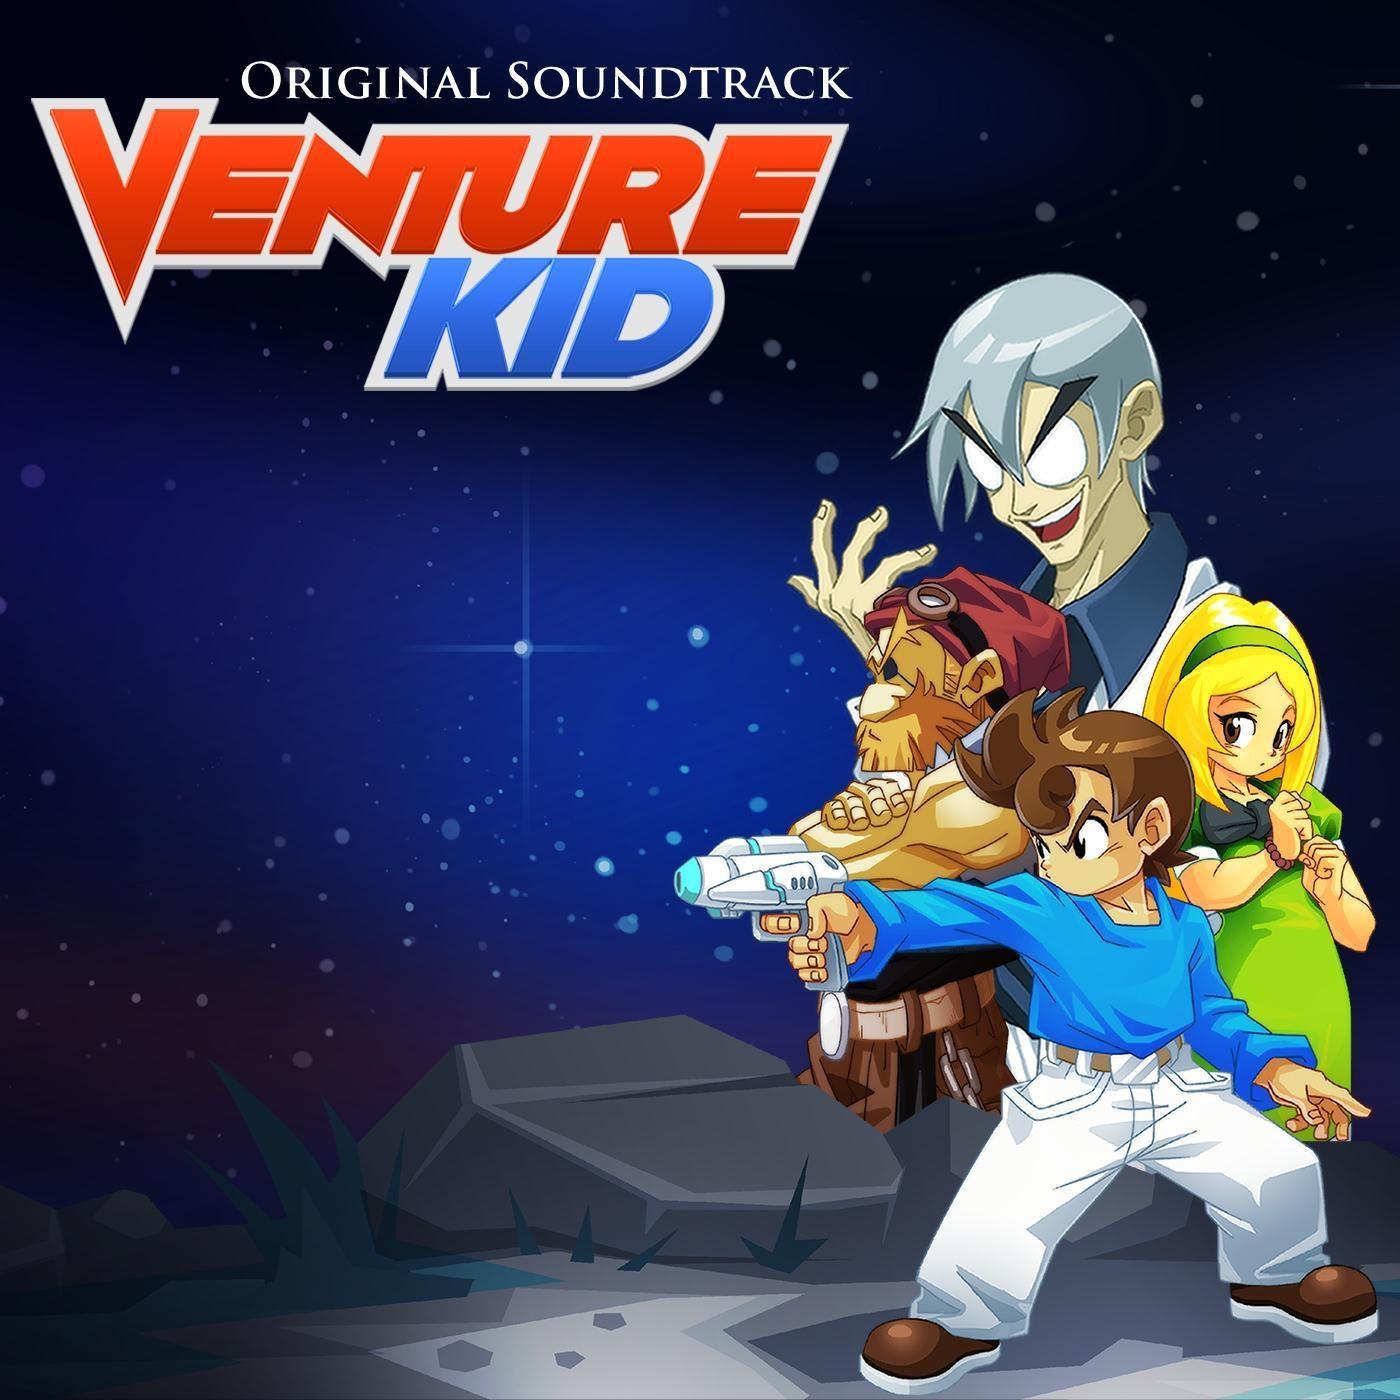 Venture Kid (Original Soundtrack)